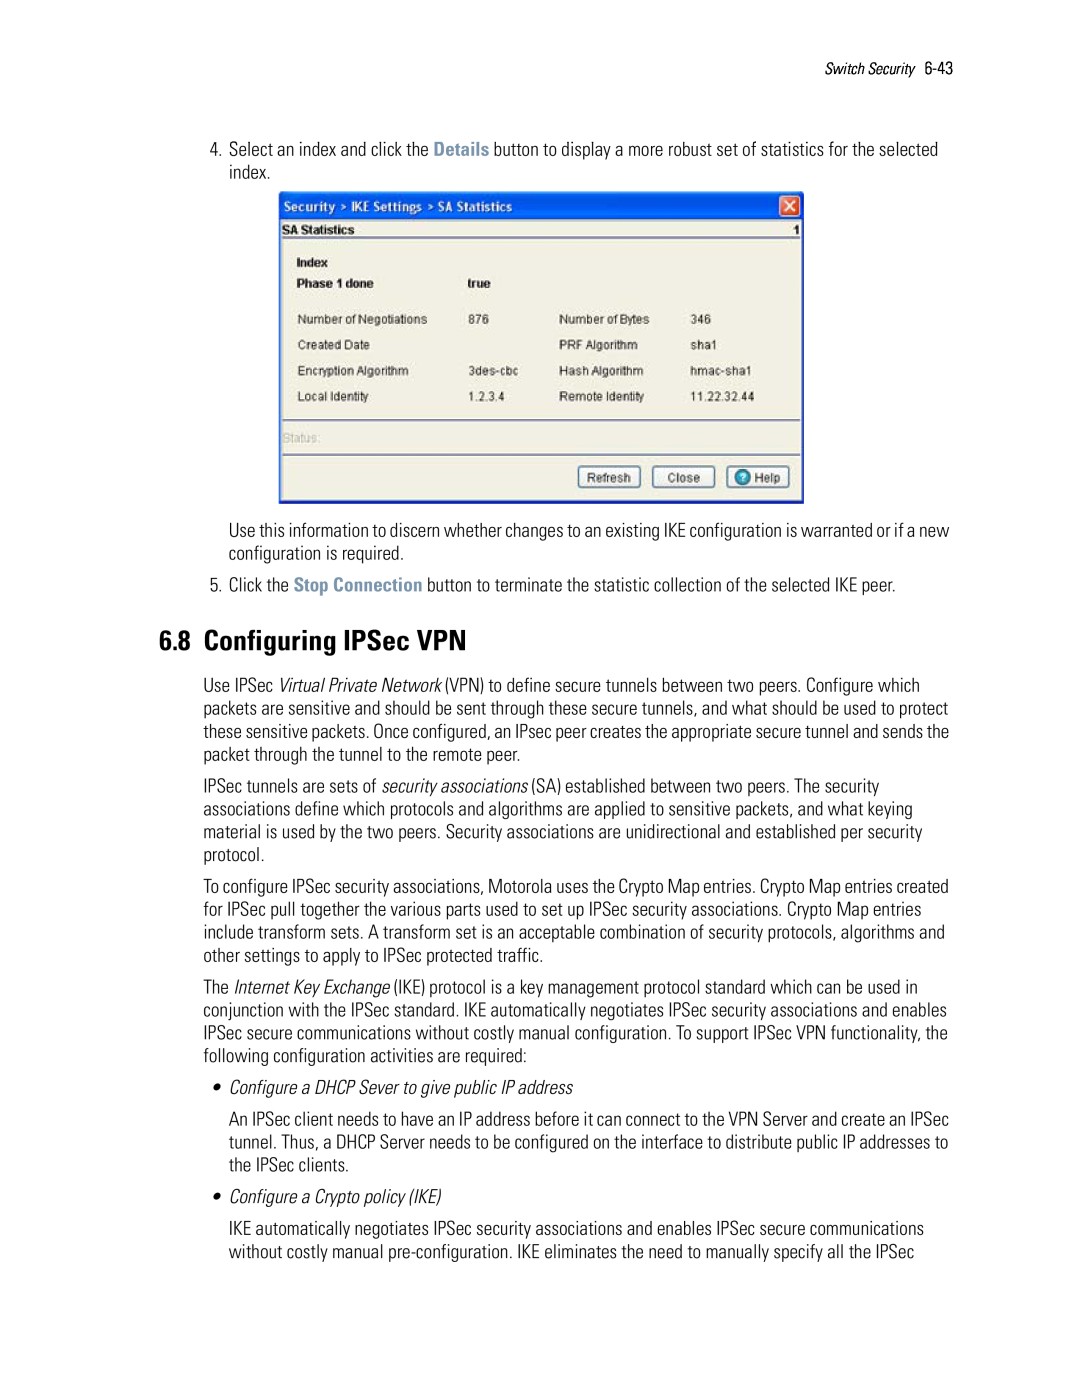 Motorola WS5100 manual 6.8Configuring IPSec VPN, •Configure a DHCP Sever to give public IP address 